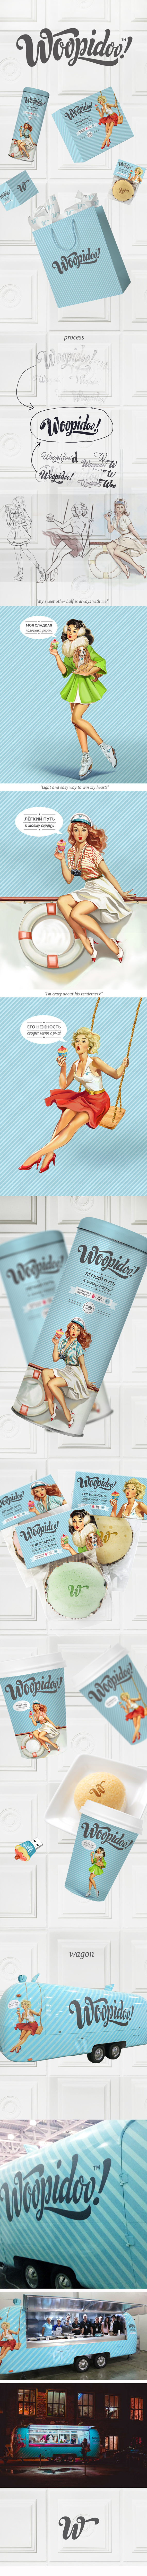 Woopidoo by Valeria Polubiatko #branding #packaging #design #pin-up #identity